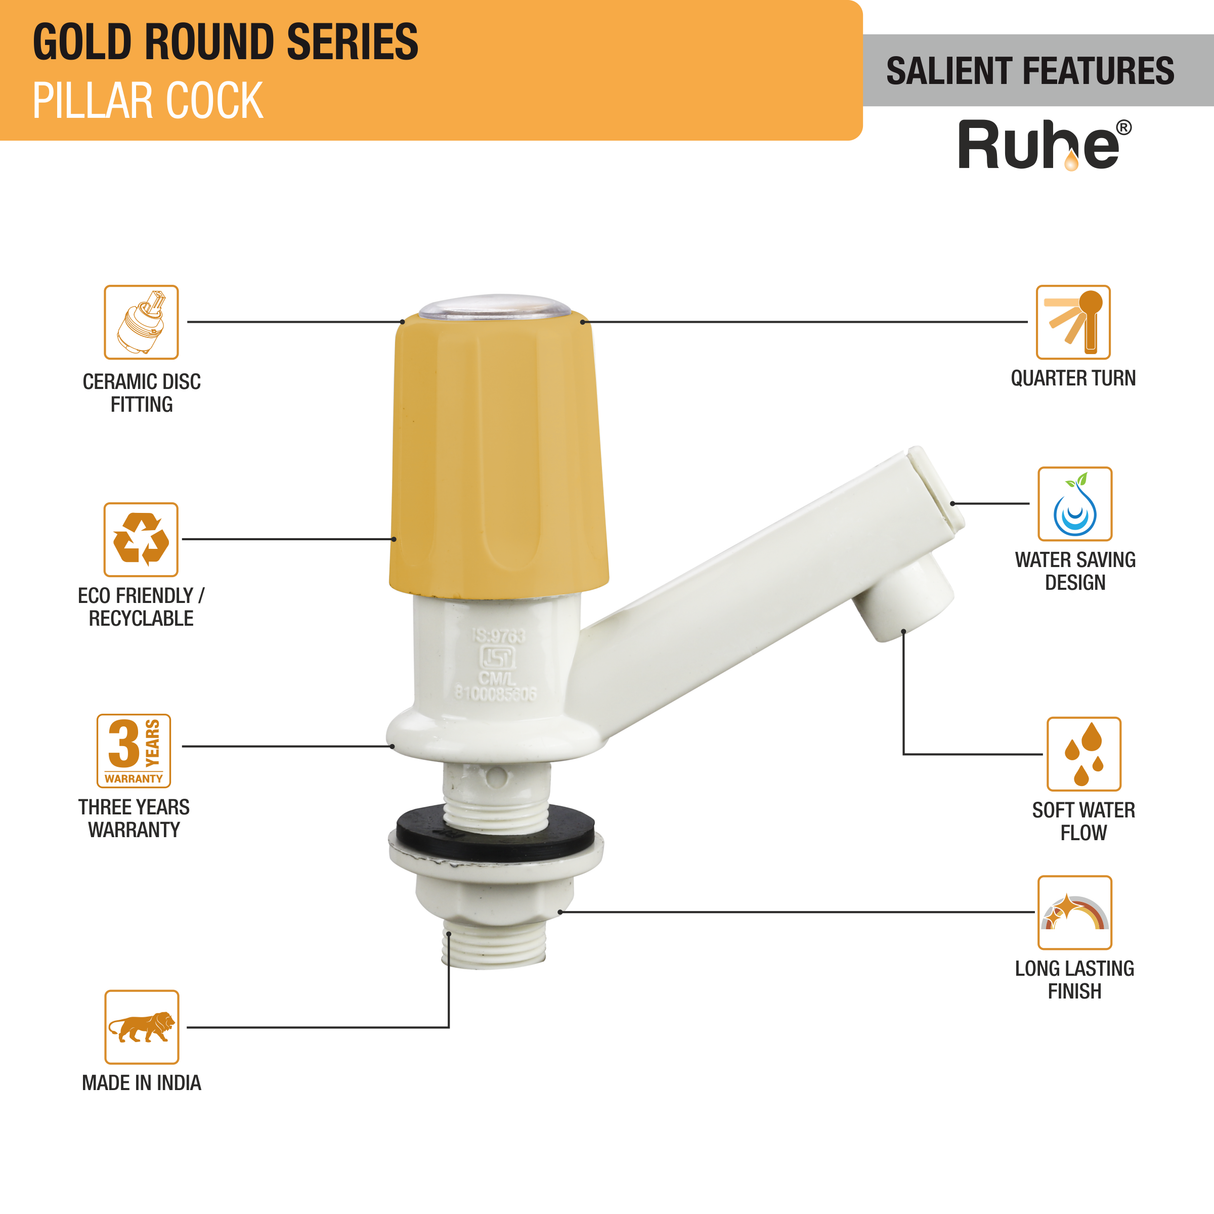 Gold Round PTMT Pillar Cock Faucet features